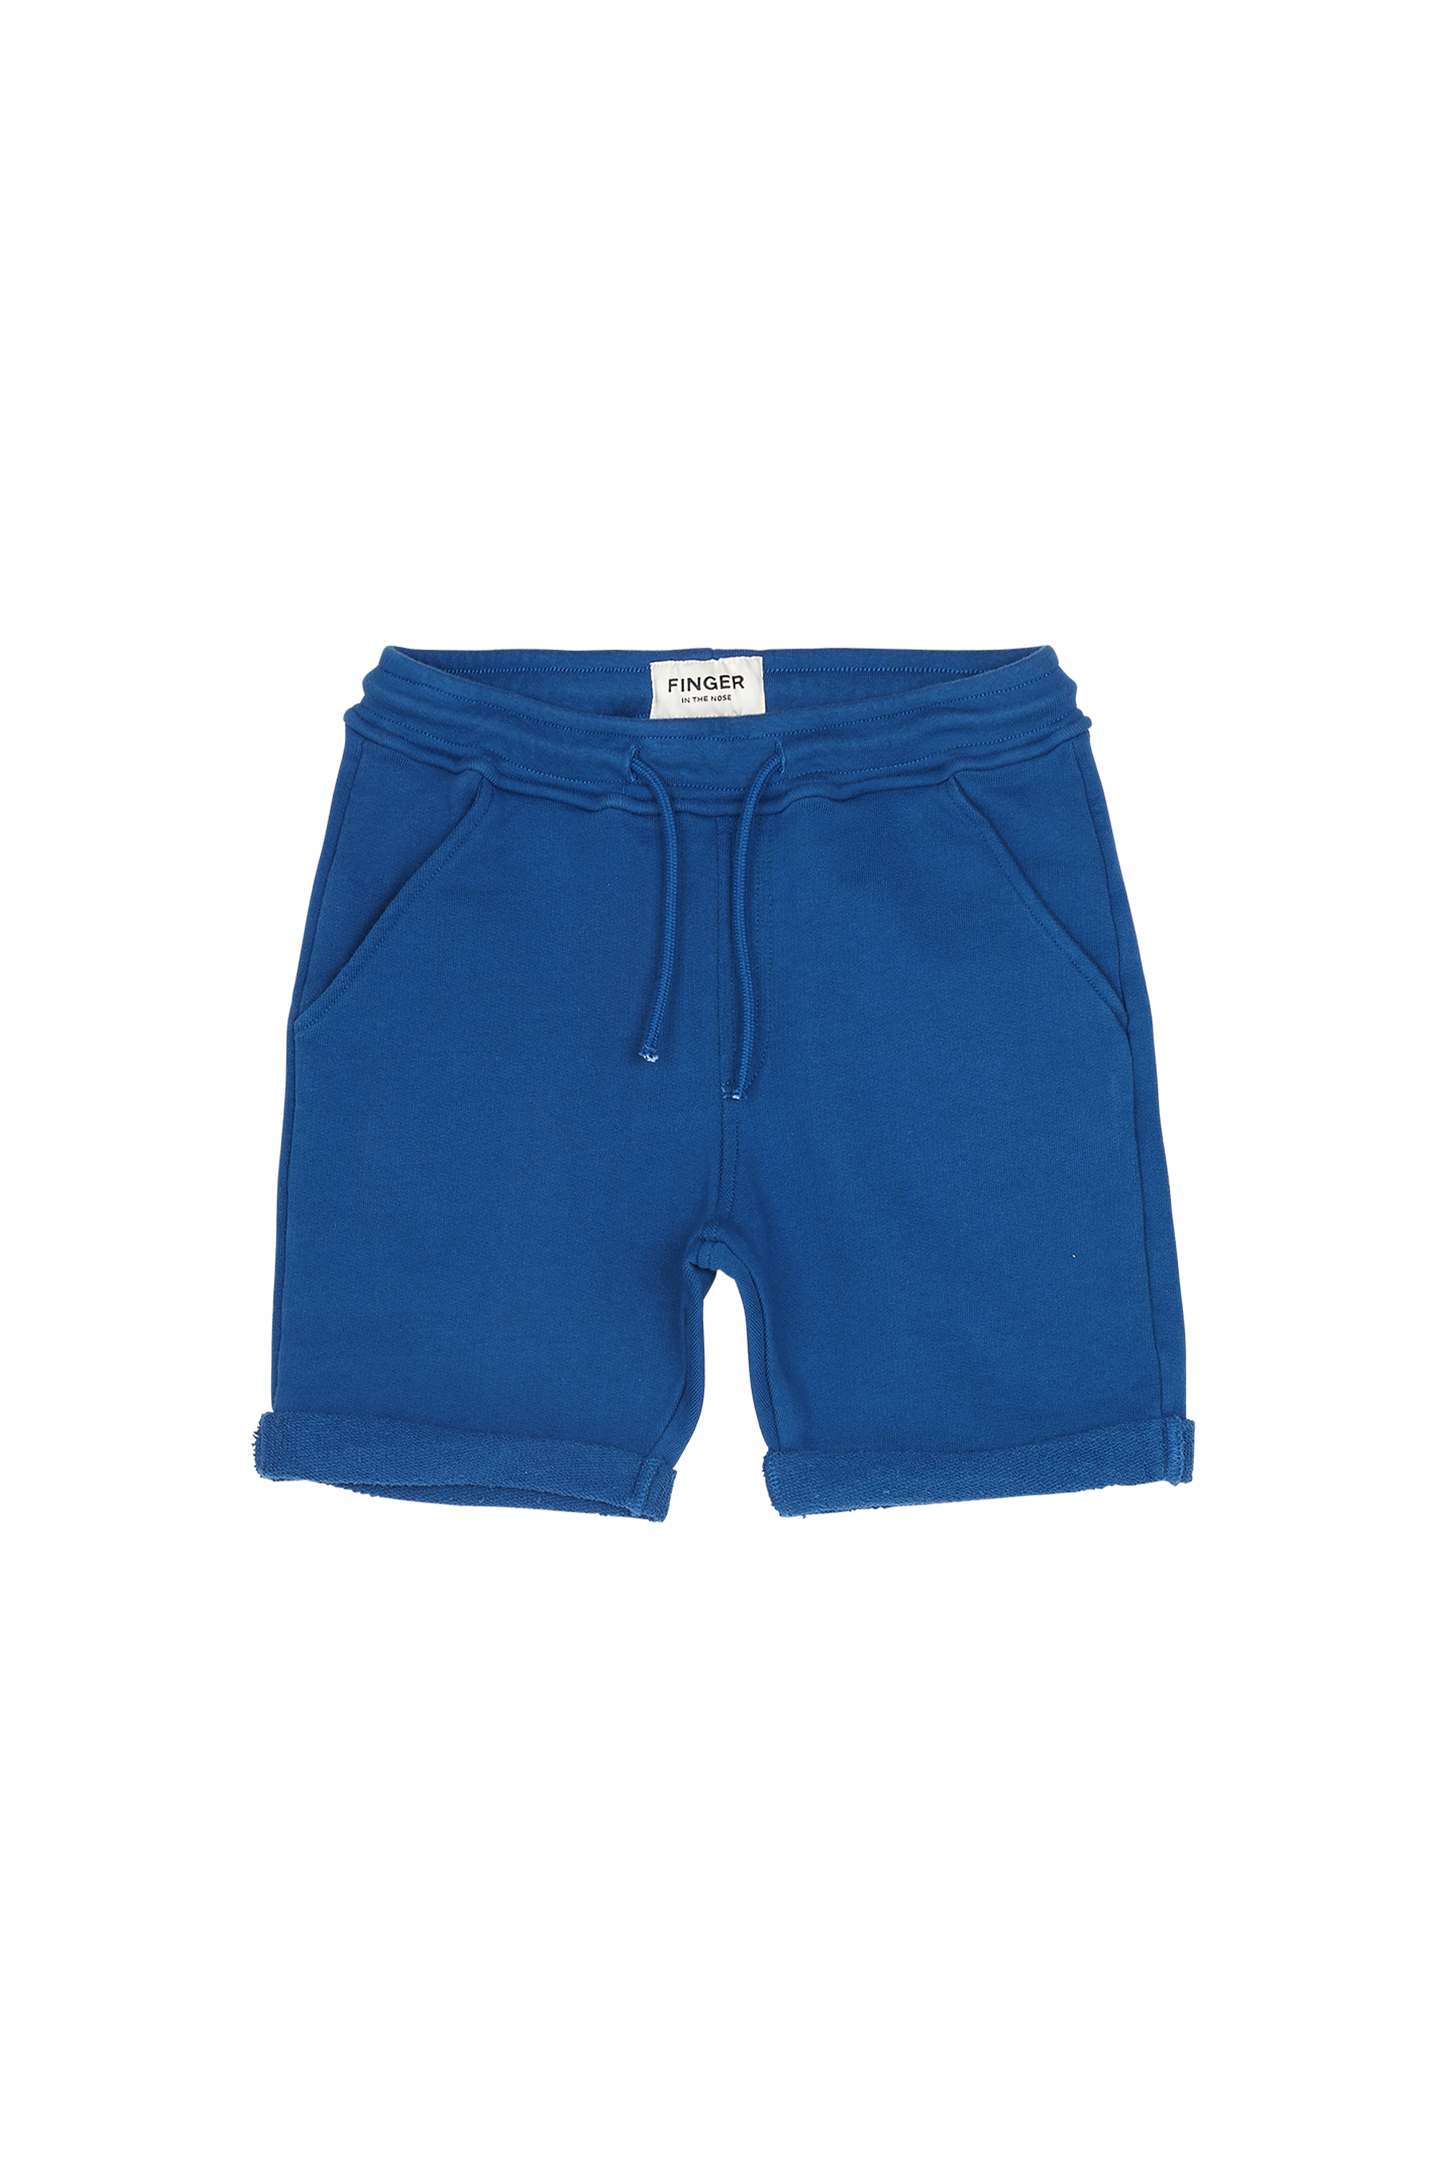 NEW GROUNDED True Blue - Bermuda Shorts | Women